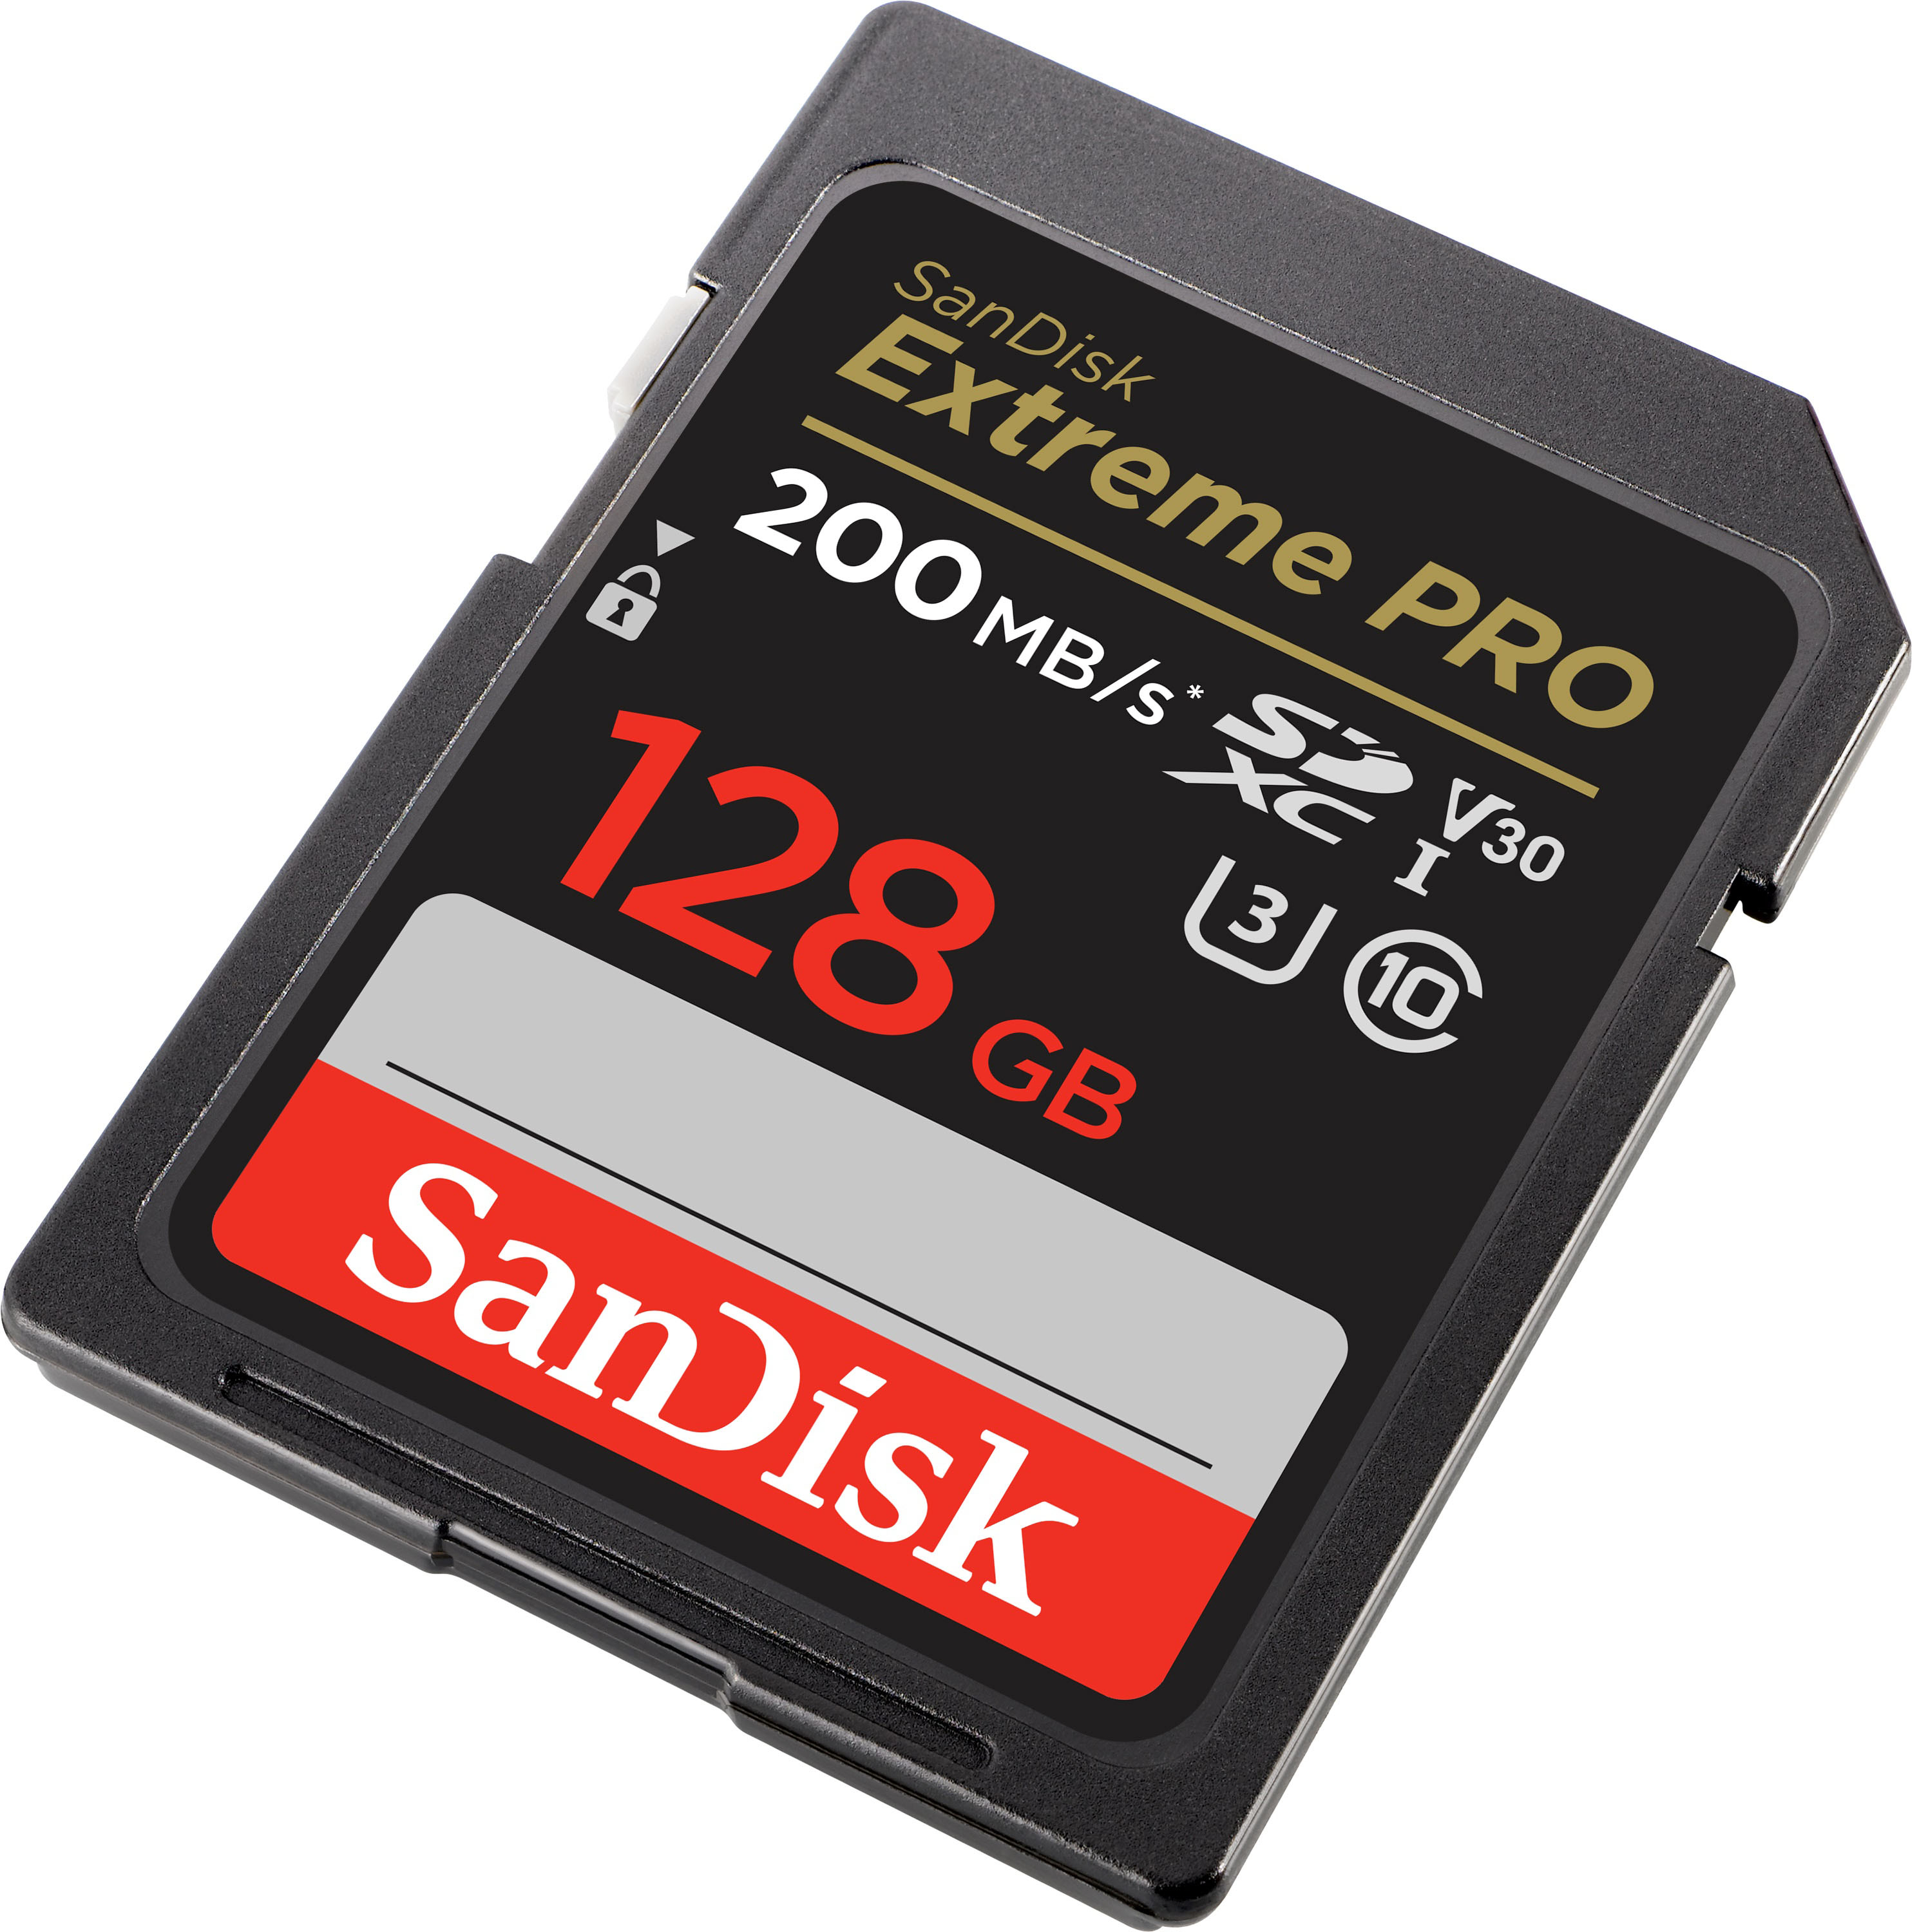 SanDisk Extreme PRO 128GB SDXC UHS-I Memory Card SDSDXXD-128G 